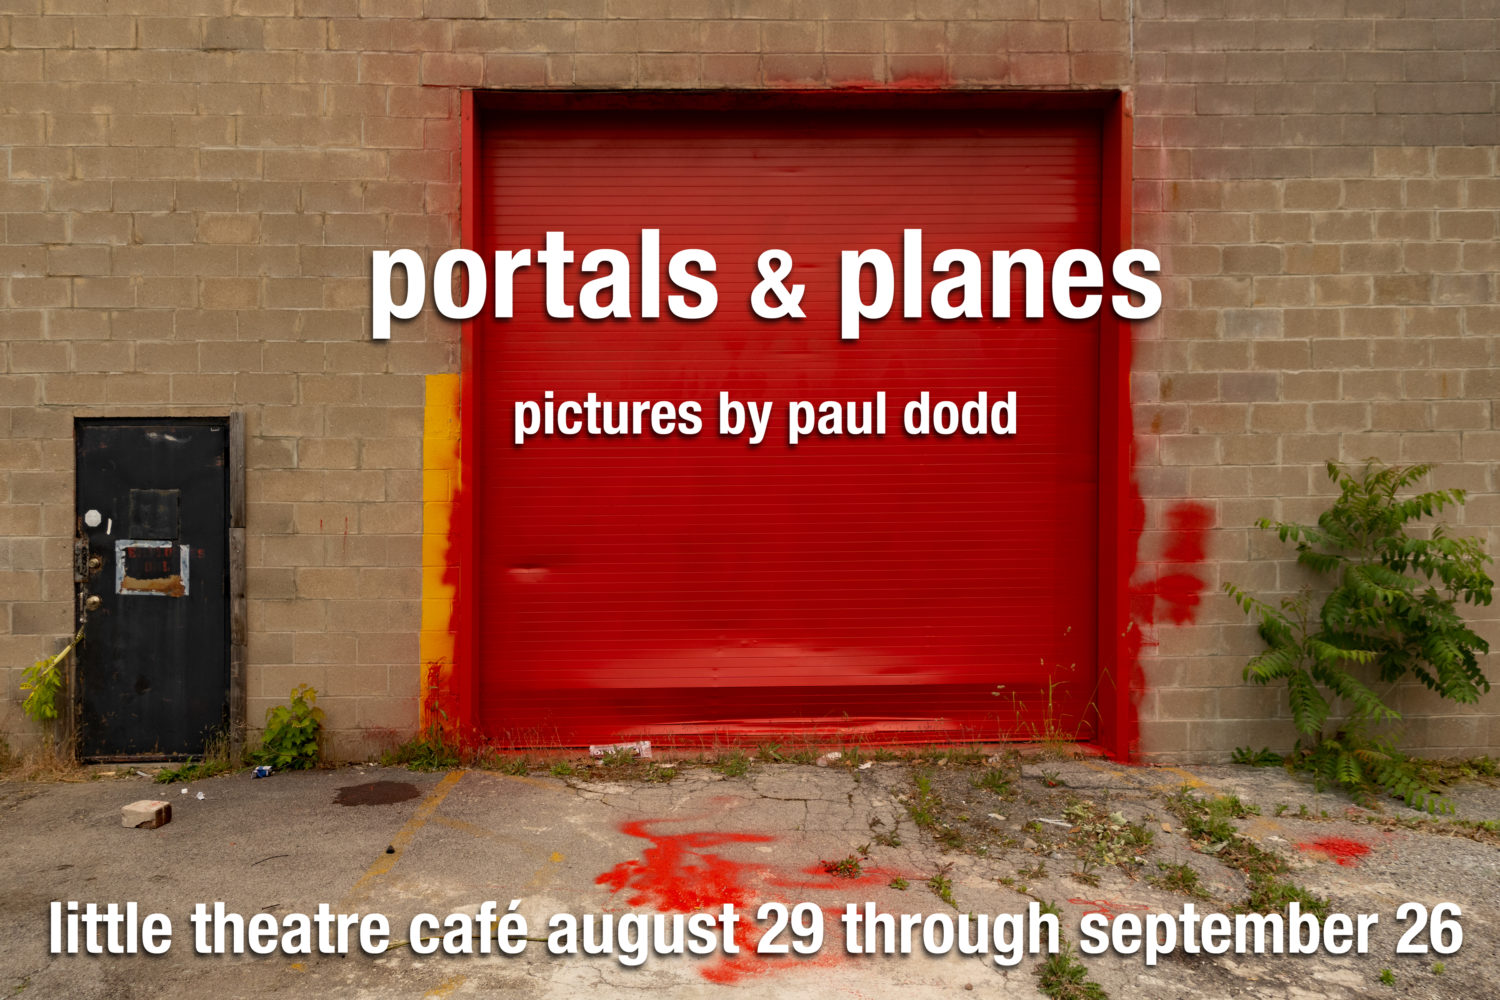 "Portals & Planes: Pictures by Paul Dodd" announcement